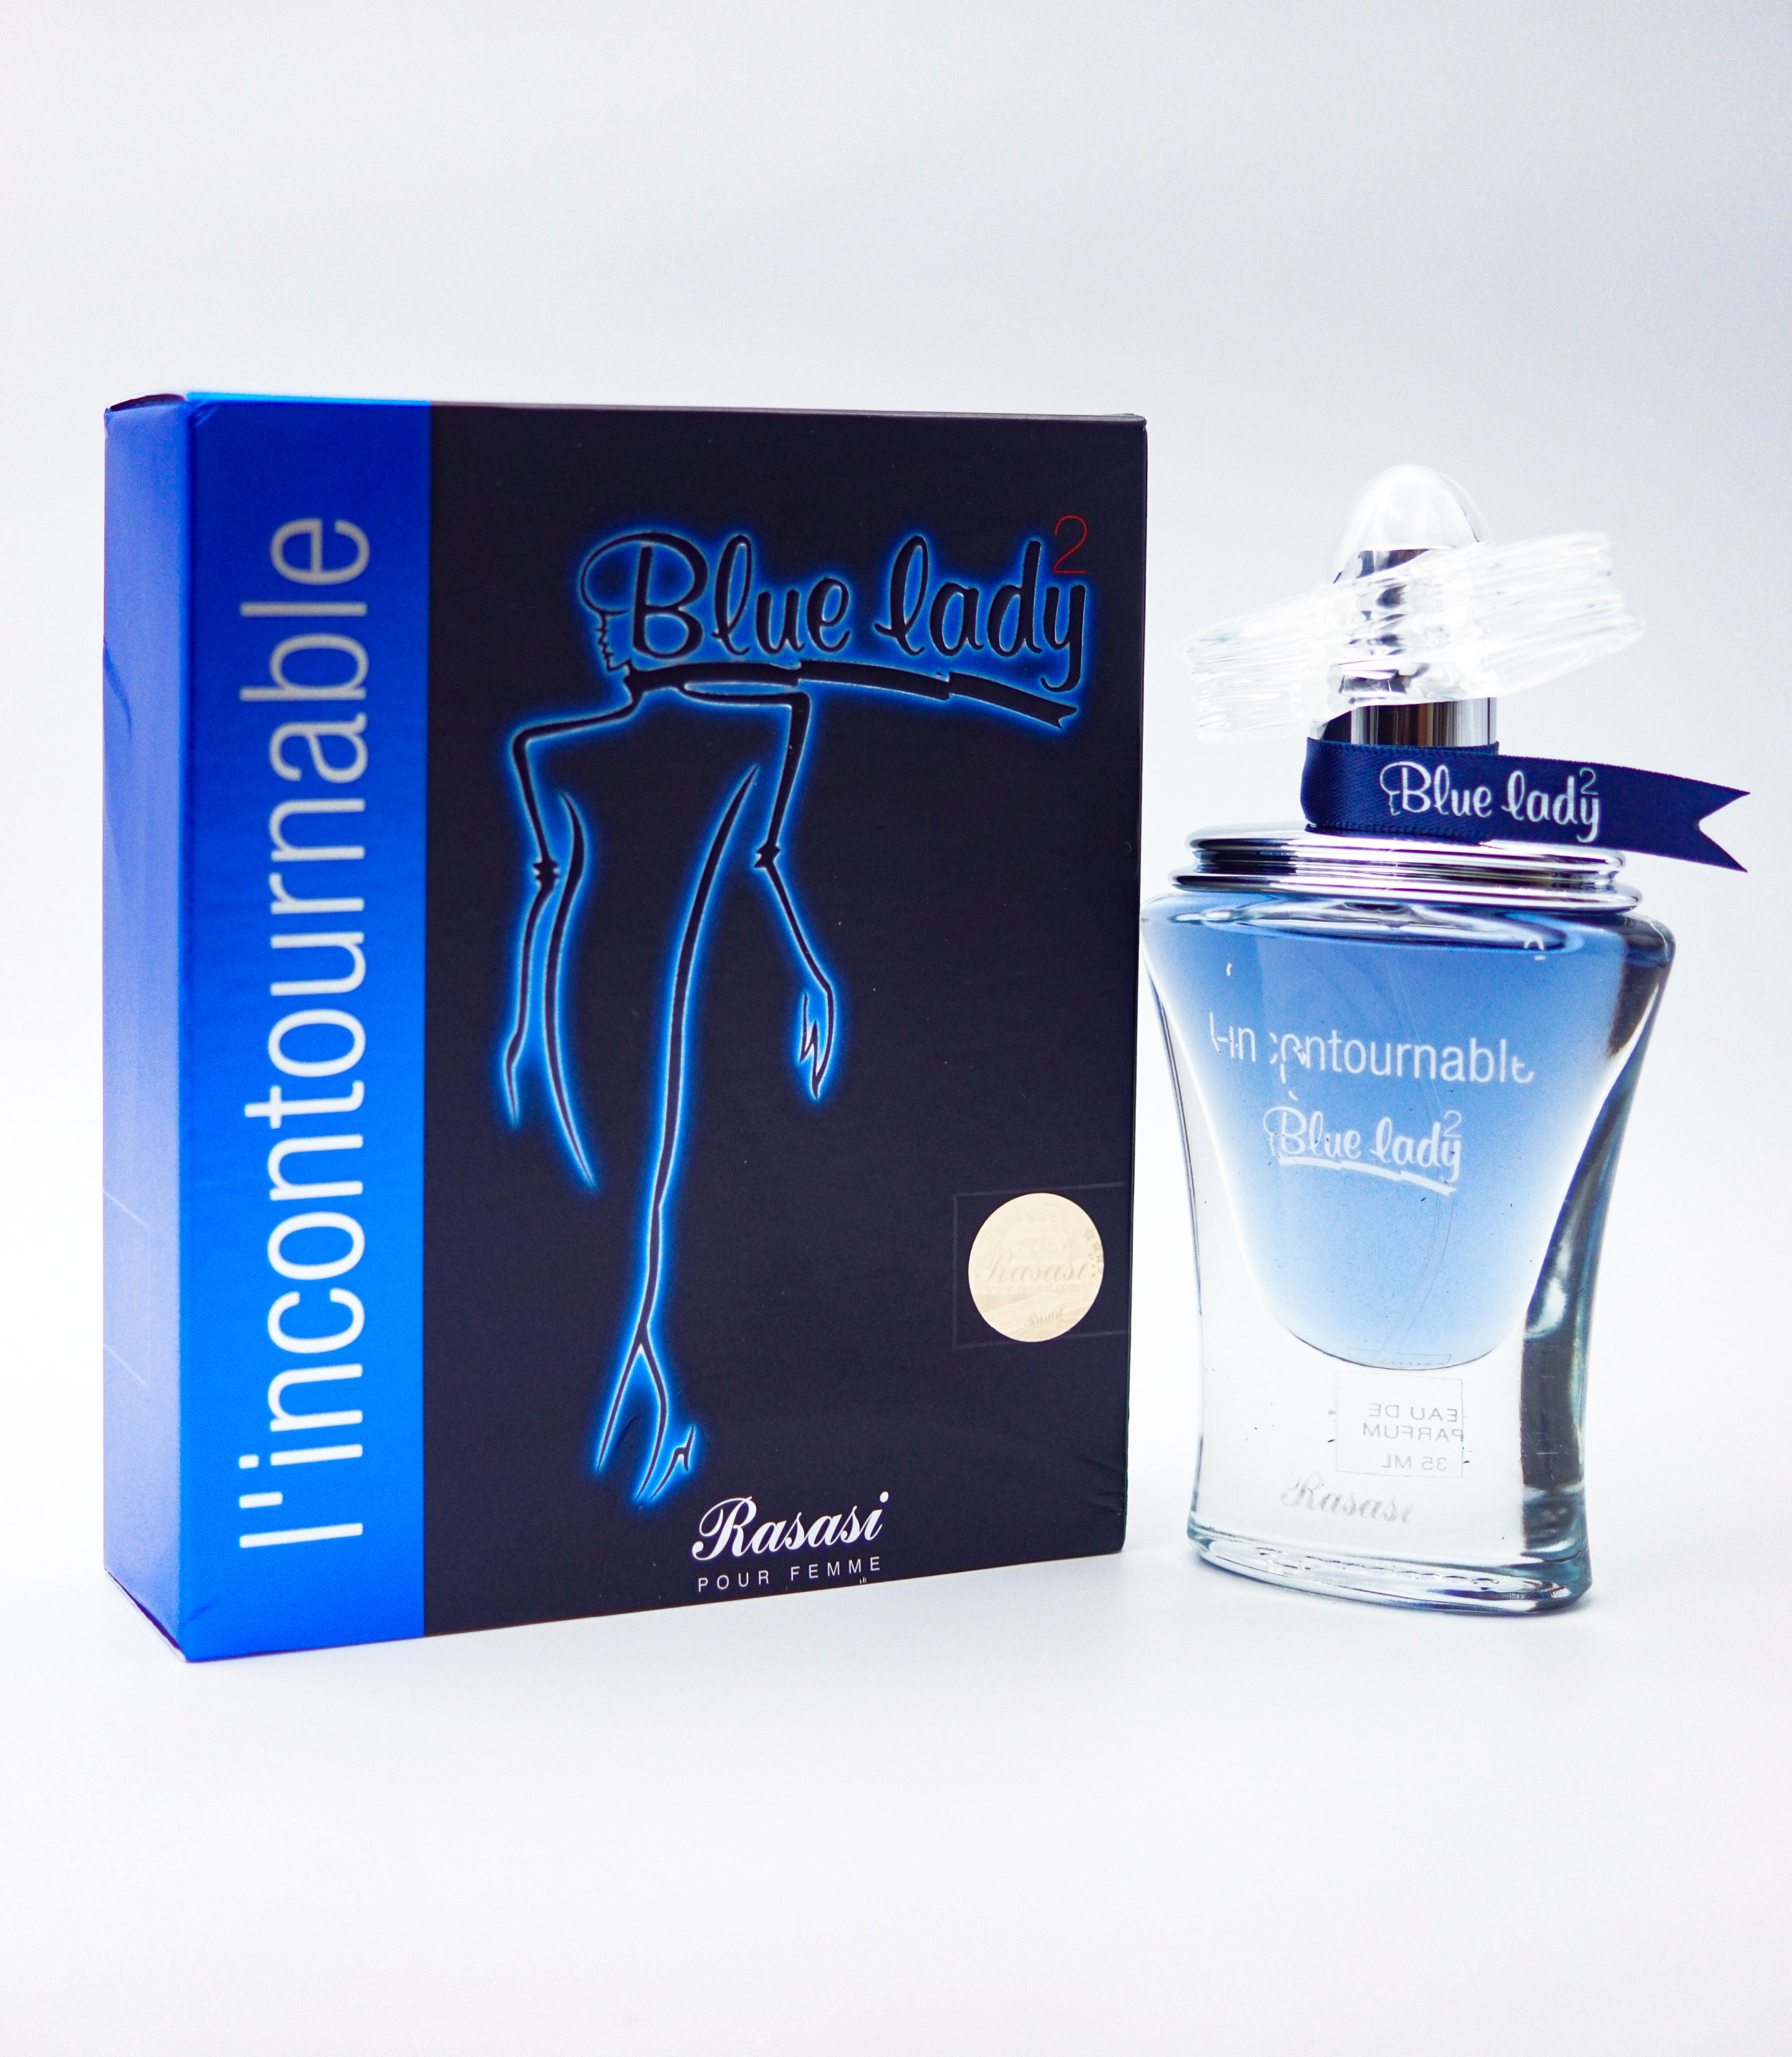 Rasasi Blue Lady 2 L incontournable 35 ml Eau De Perfume For Women SKU 96847